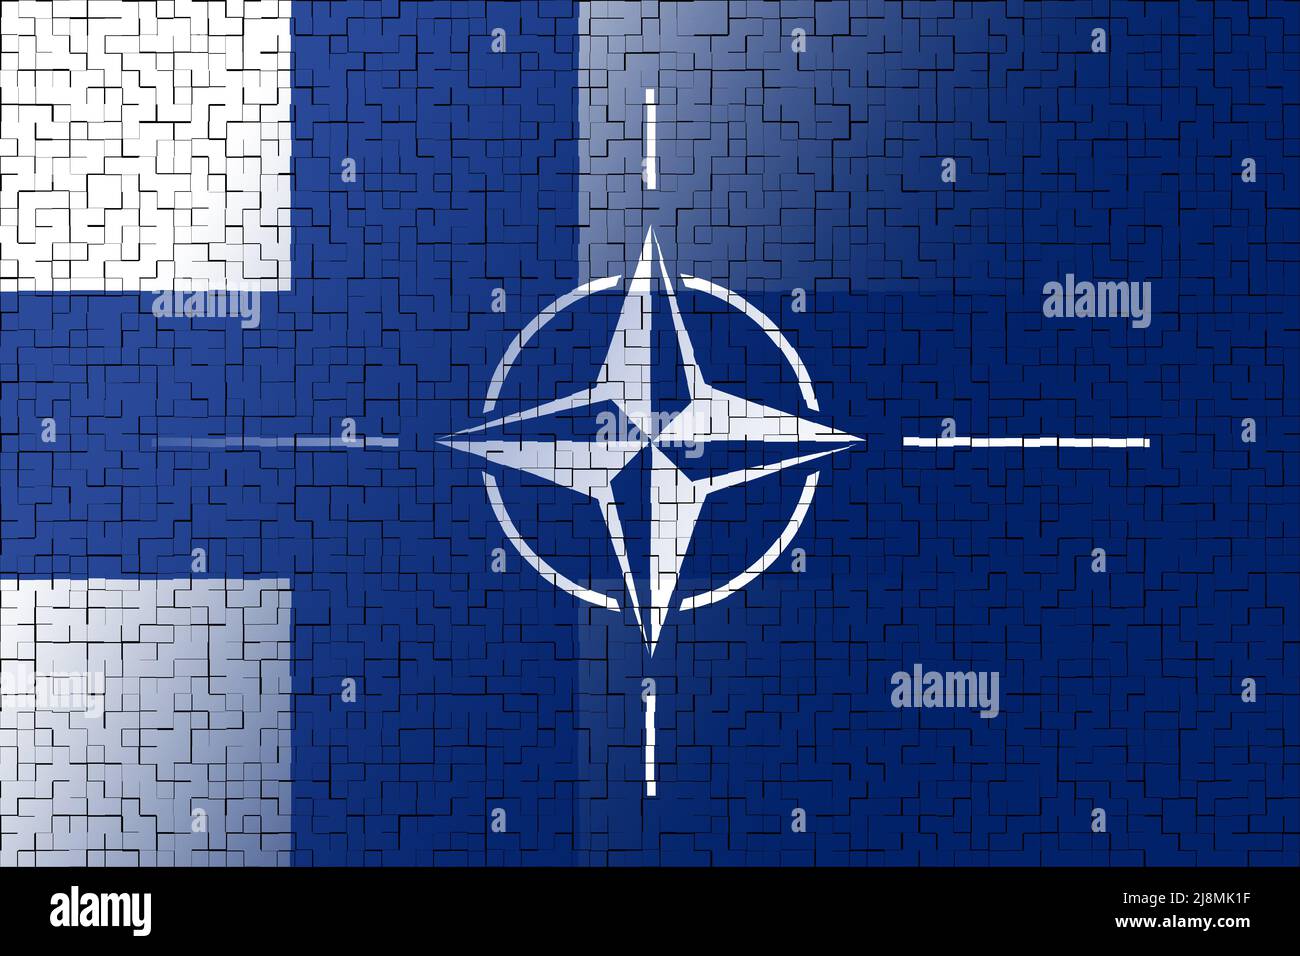 NATO-OTAN. Finland. NATO flag. Finland flag. Flag with the NATO logo. Concept of annexation of Finland with NATO-OTAN. Foreground. Horizontal layout. Stock Photo